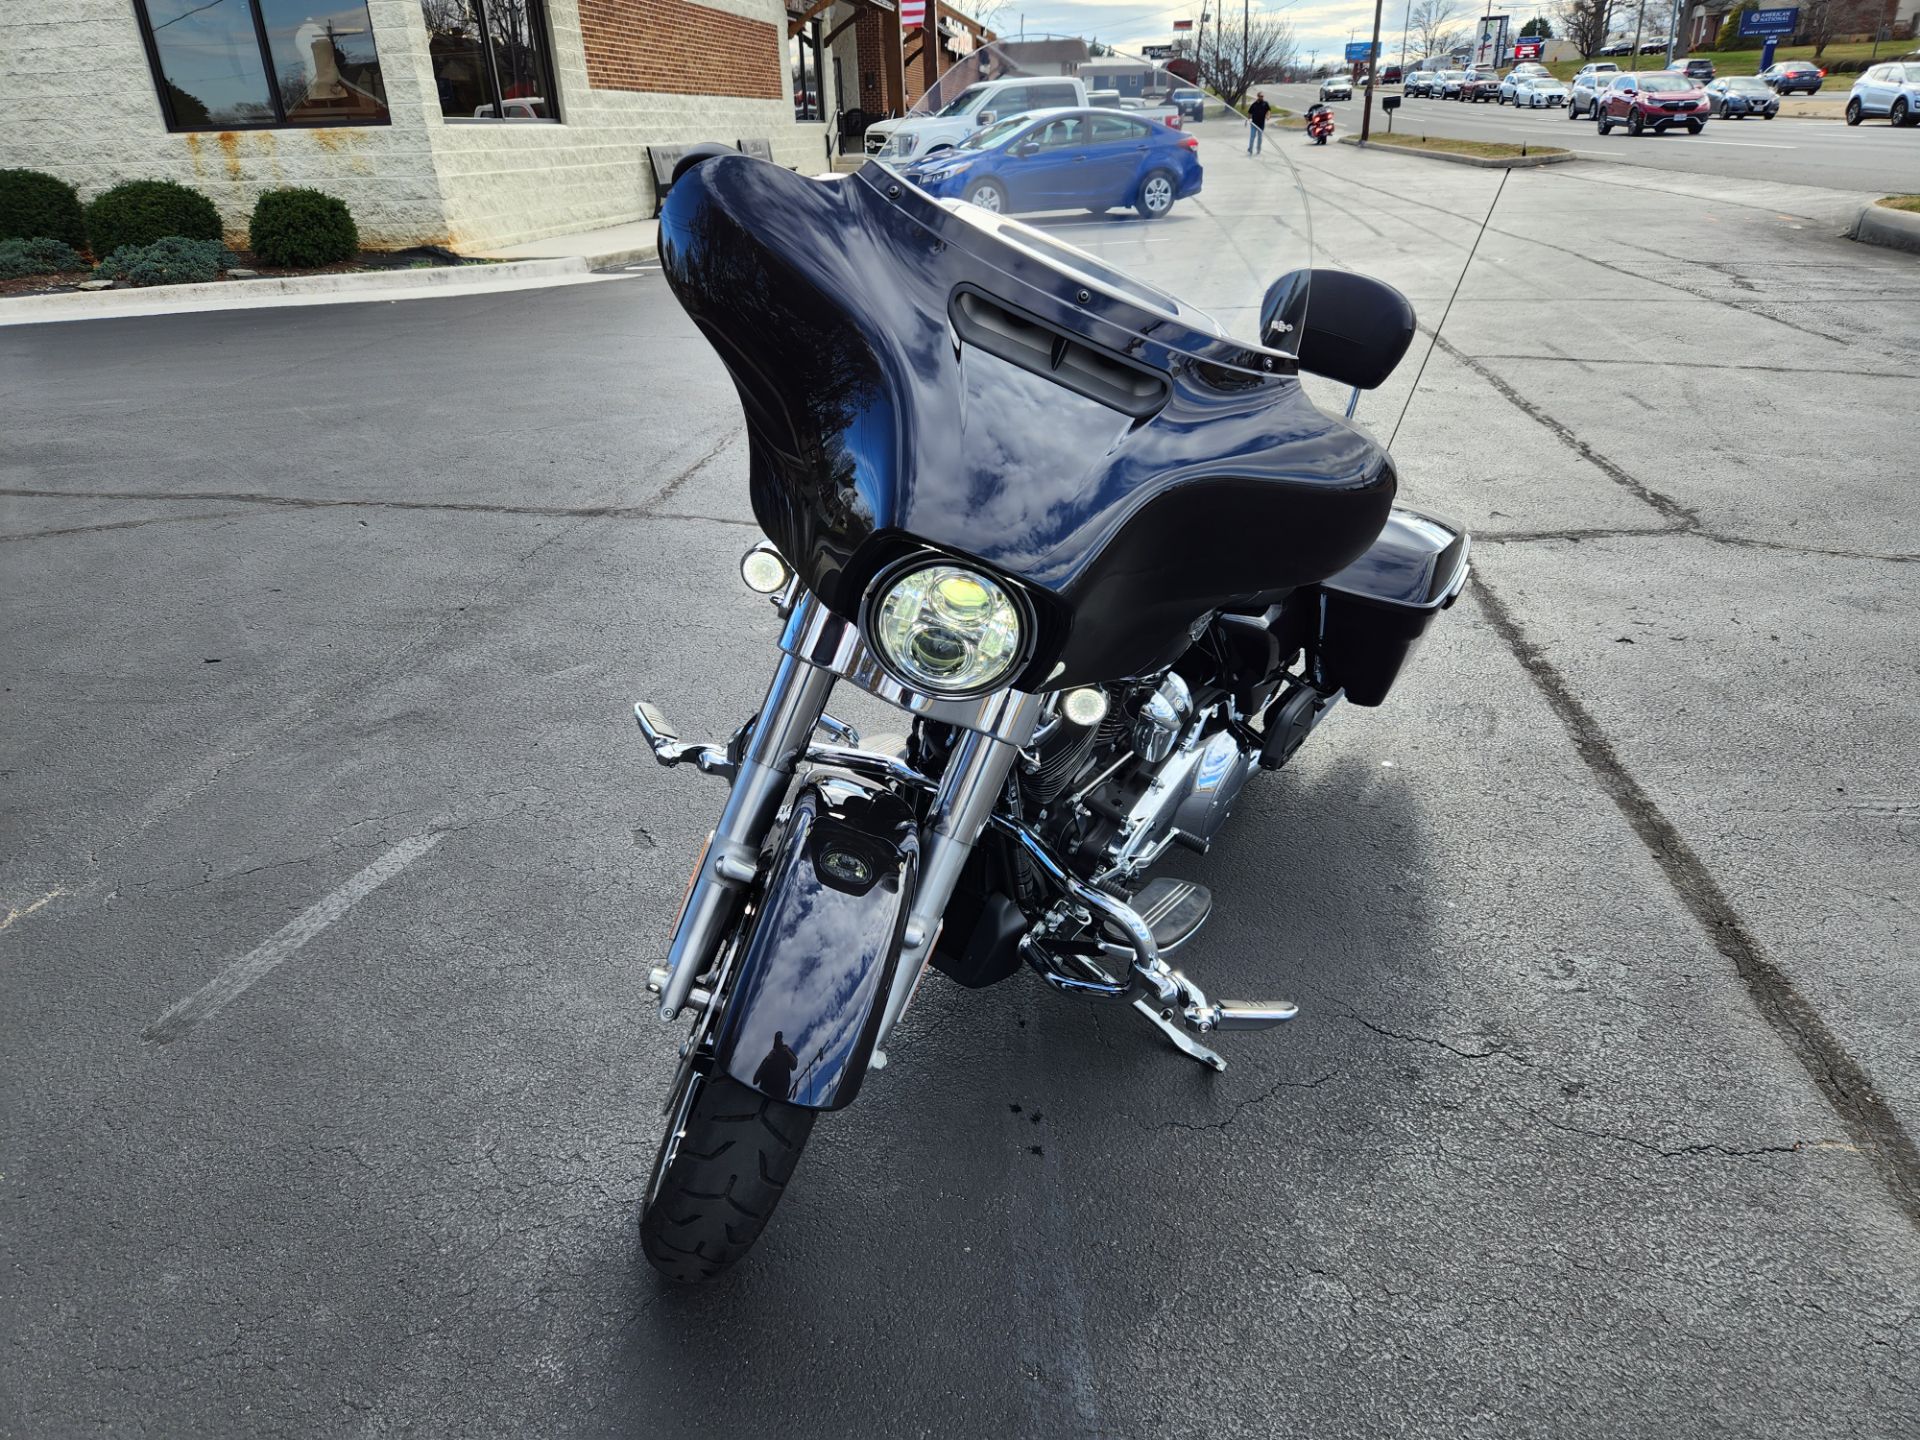 2021 Harley-Davidson Street Glide® Special in Lynchburg, Virginia - Photo 5